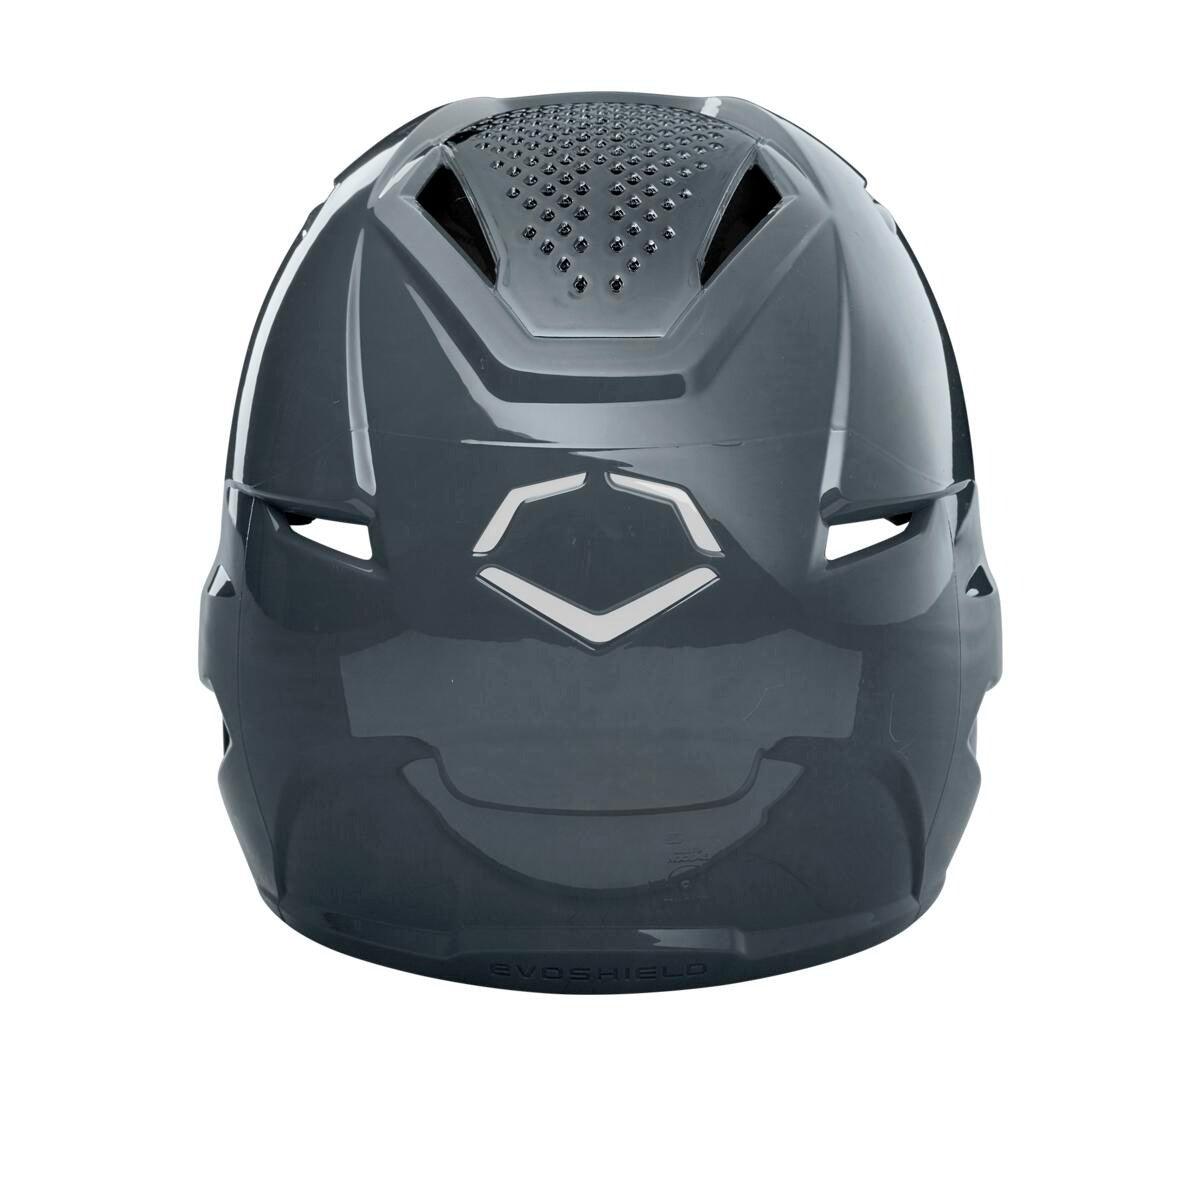 XVT Batting Helmet Junior - Sports Excellence